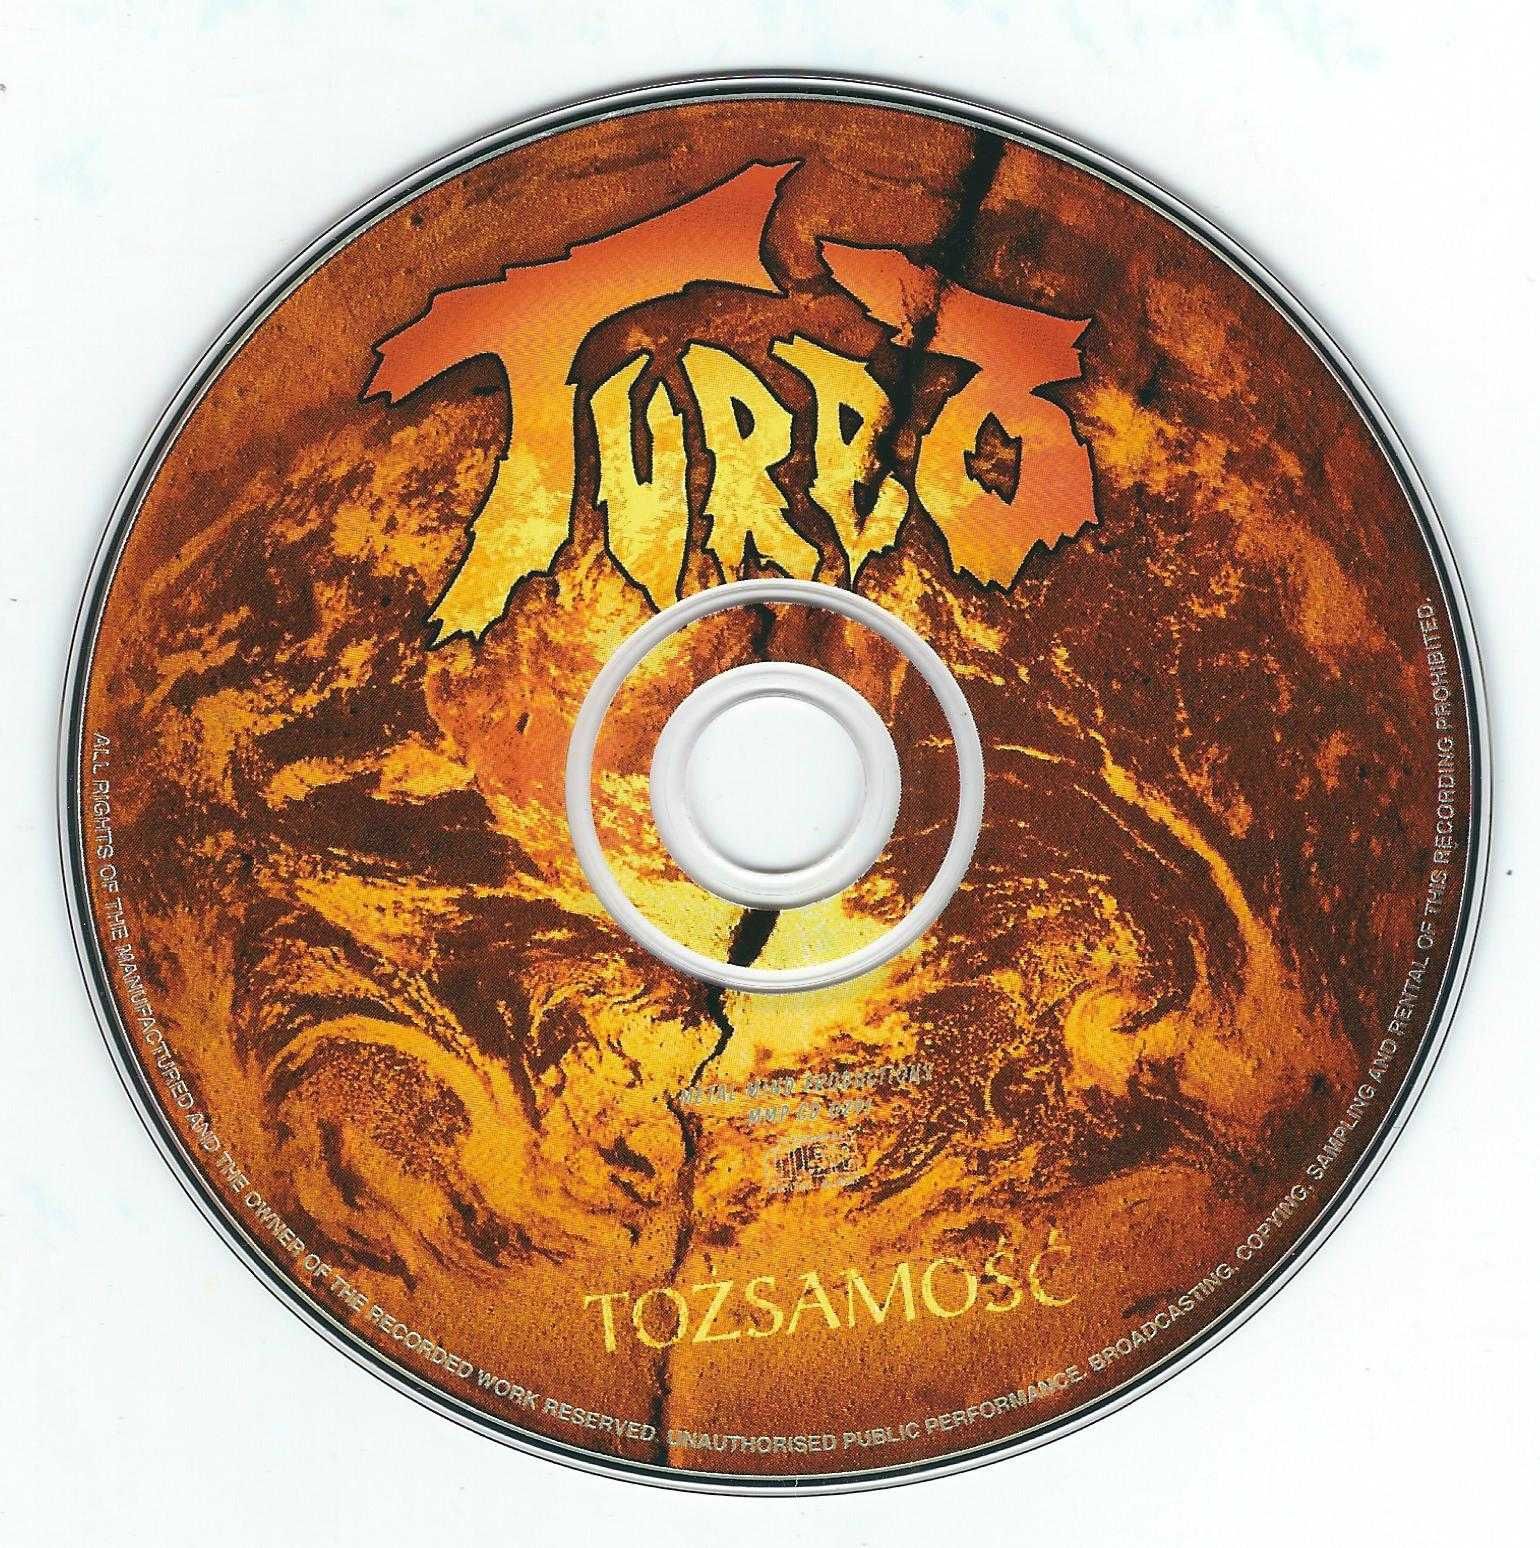 CD Turbo - Tożsamość (2004) (Metal Mind Productions)